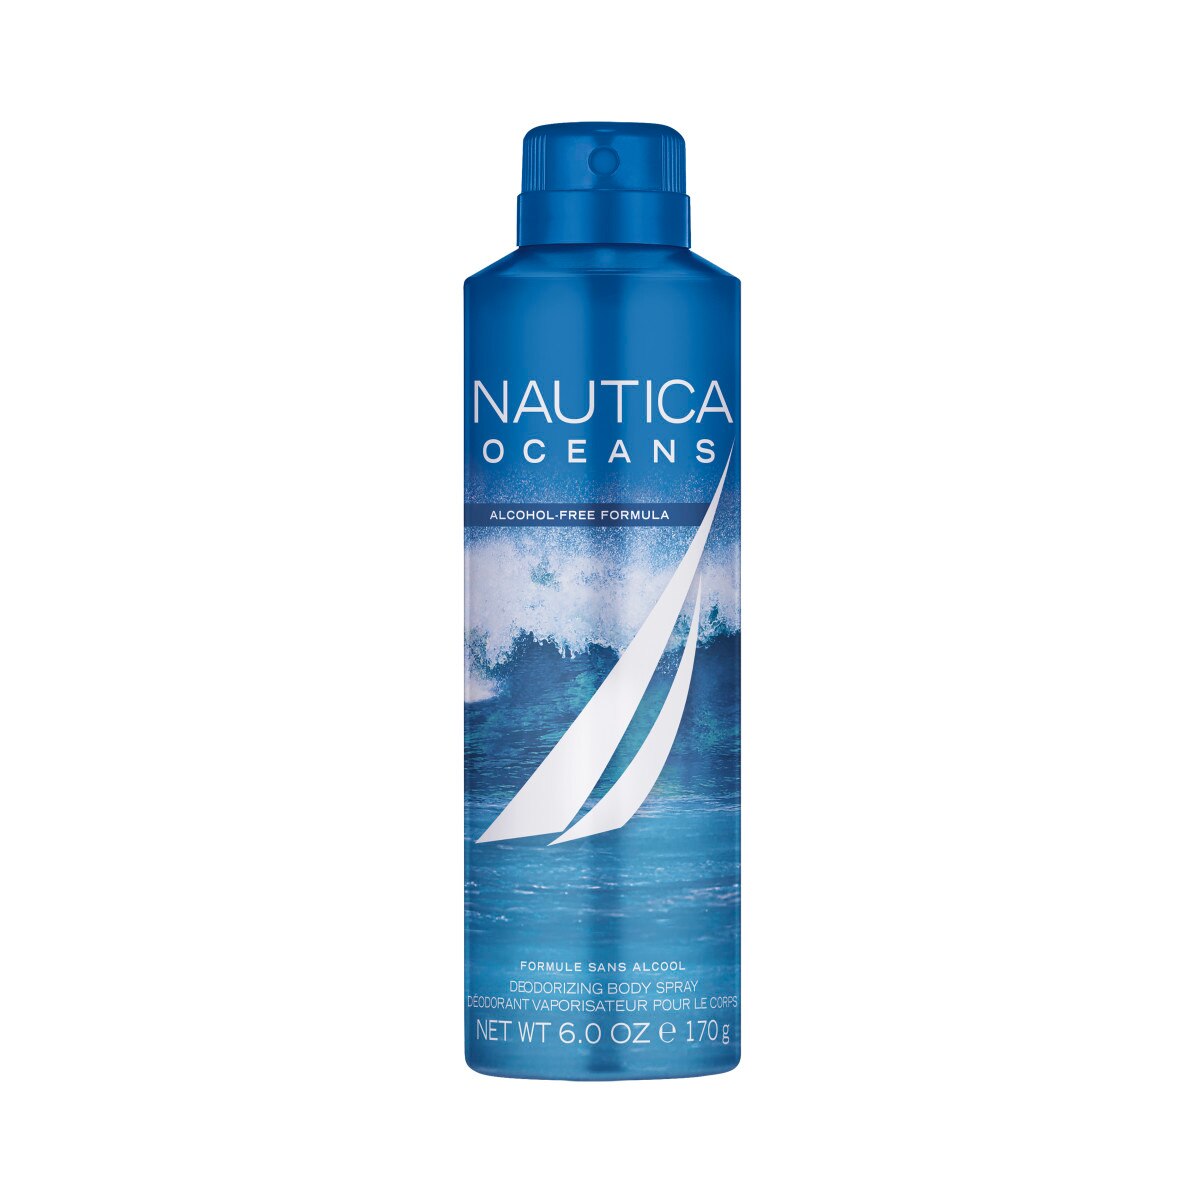 Nautica Oceans Body Spray, 6 OZ